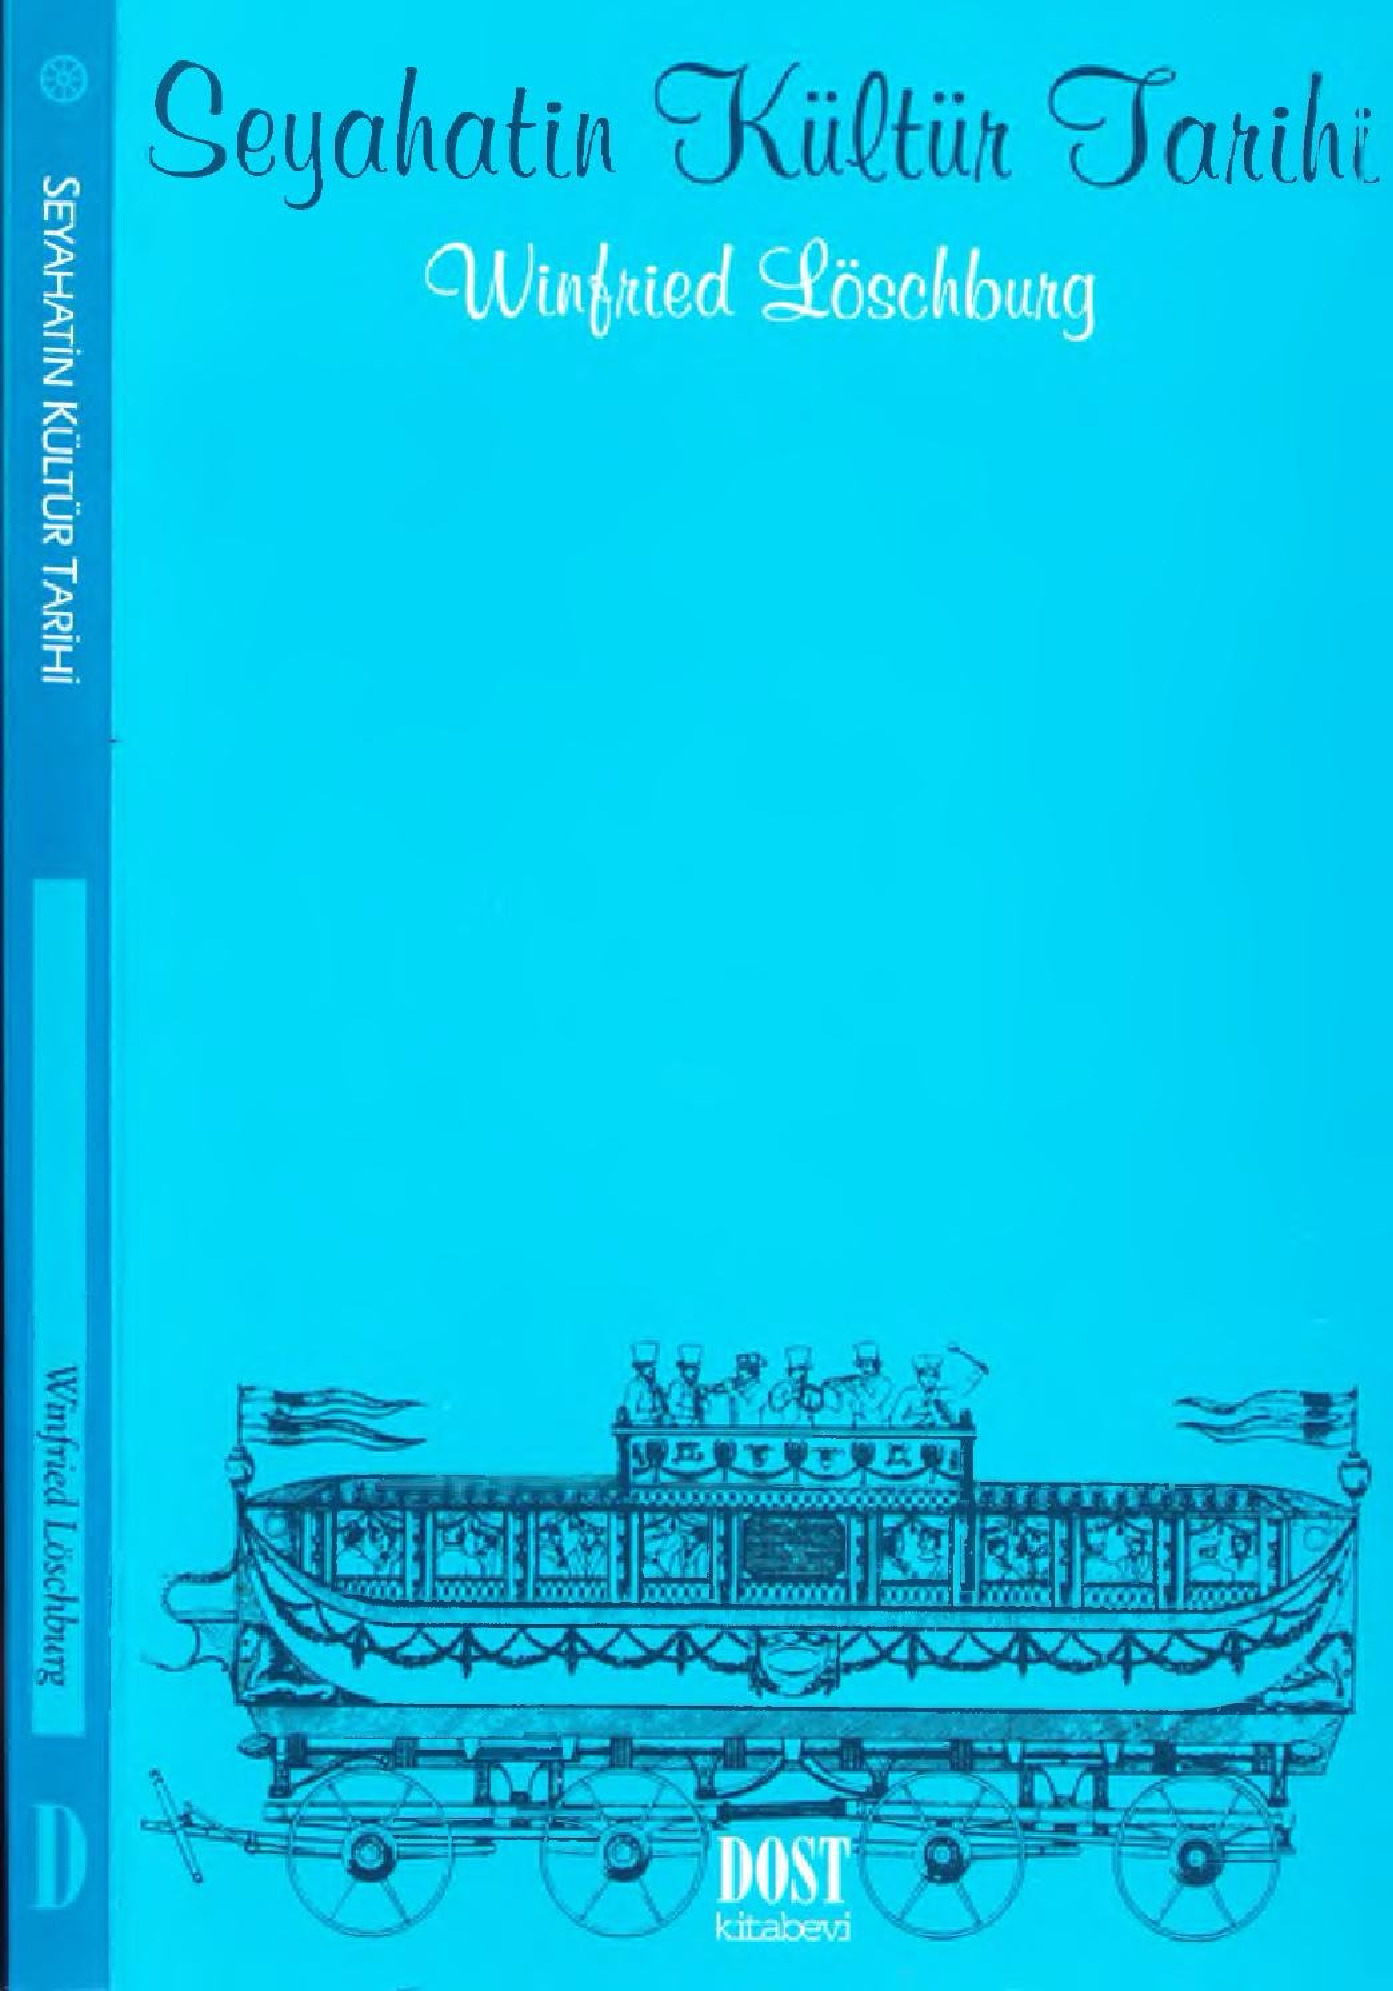 Seyahetin Kültür Tarixi-Winfried Loschburg-Jasmin Traub-1998-167s